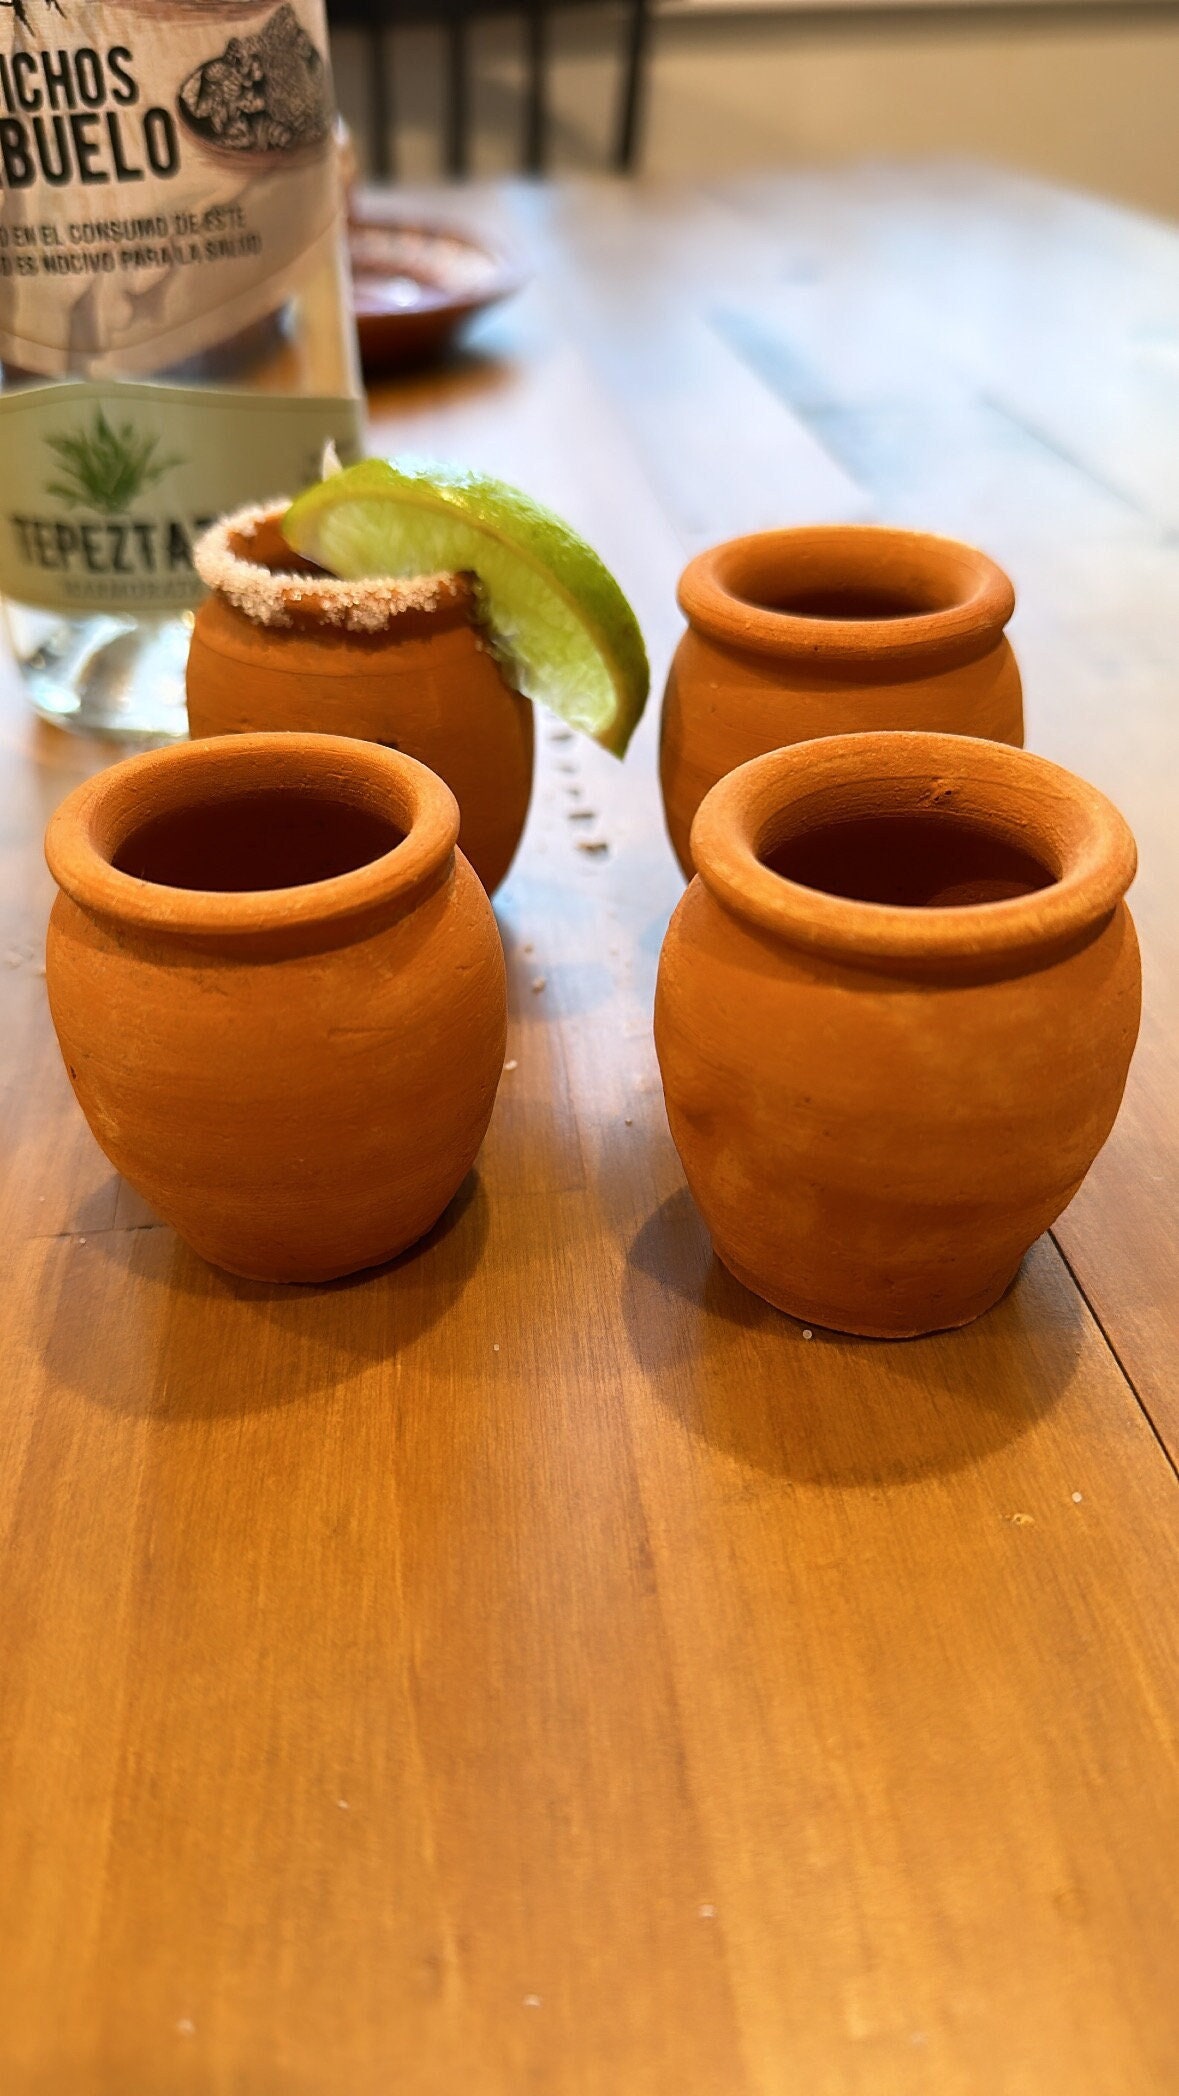 Mini Barro Jars and bowls/ mini jarritos canaletas y ollitas 